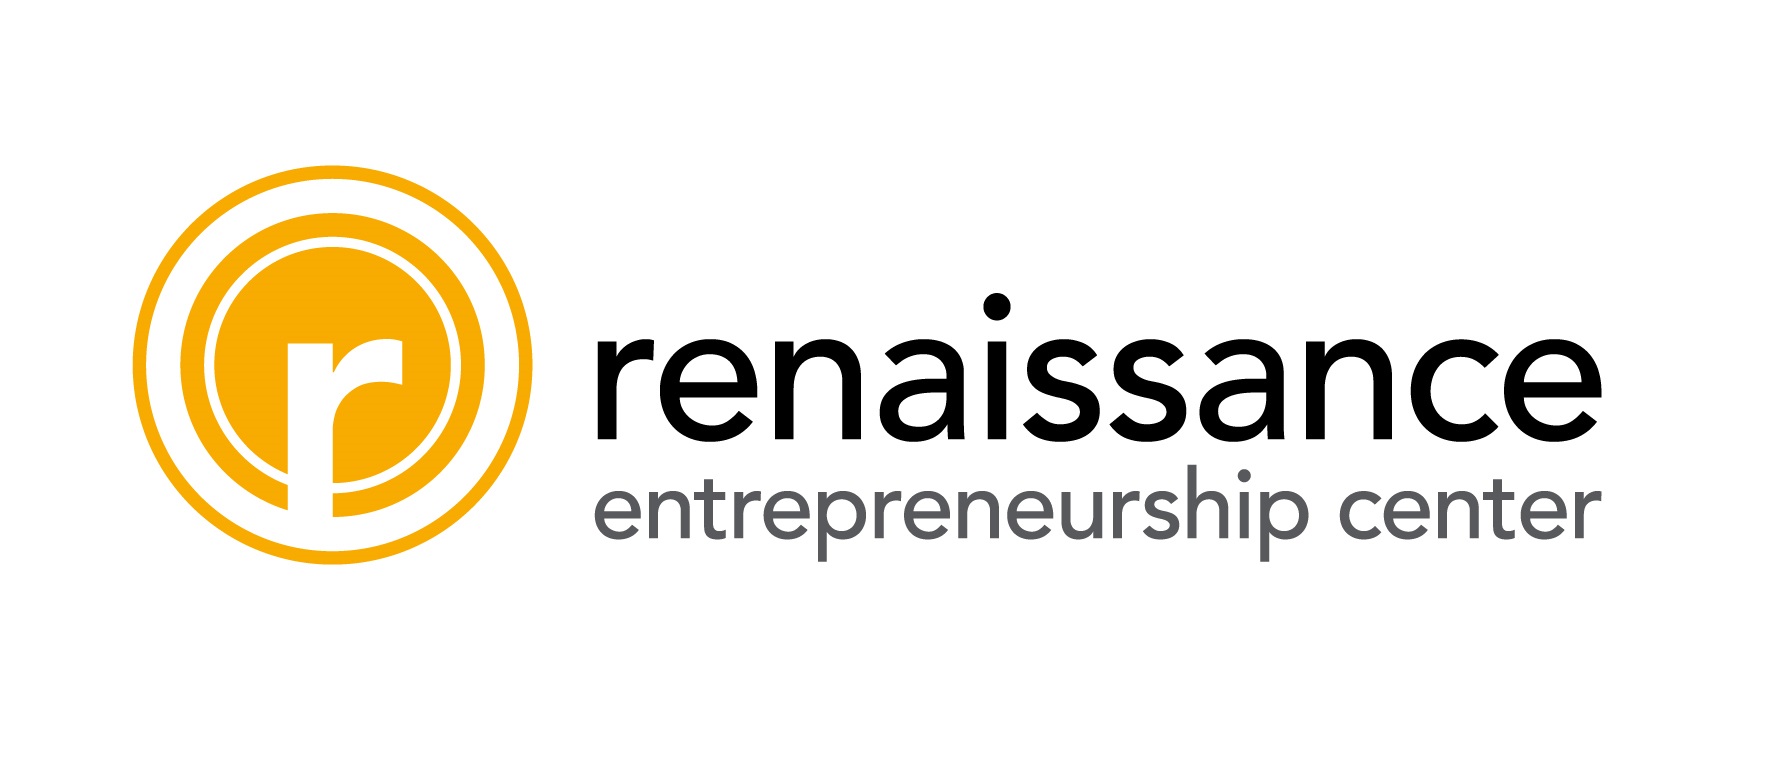 Renaissance Entrepreneurship logo  